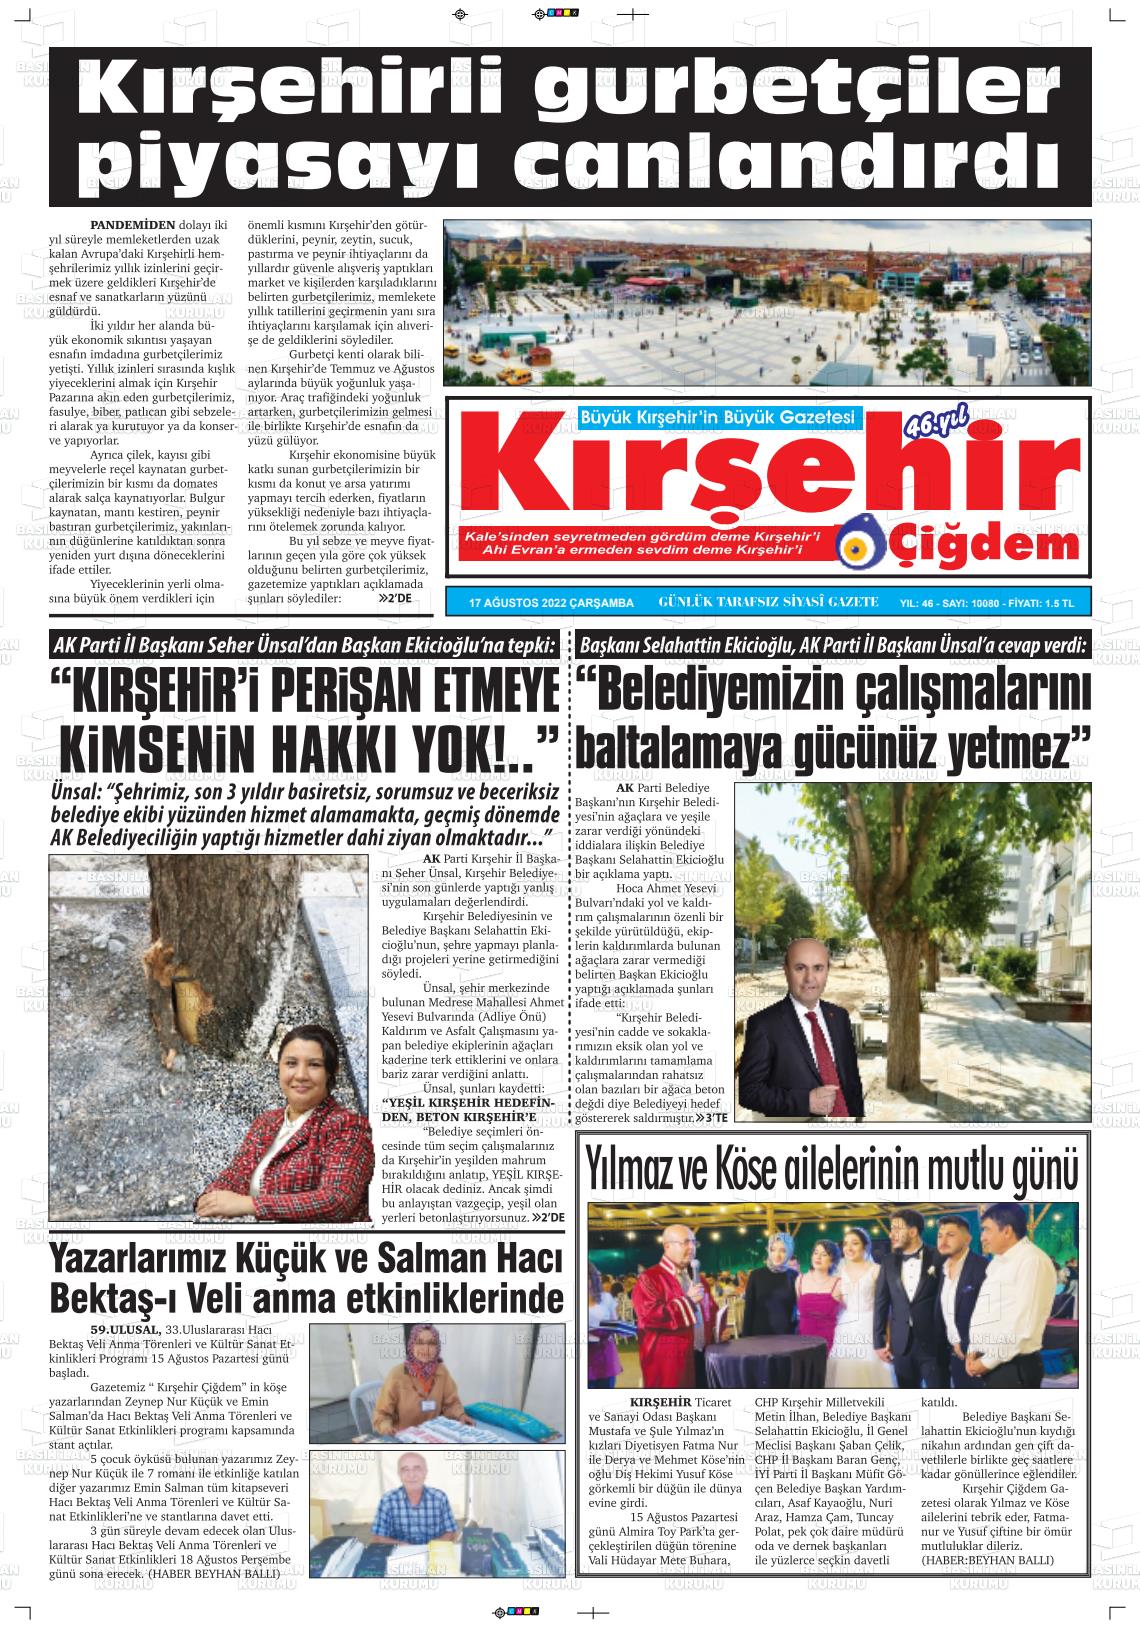 17 Ağustos 2022 Kırşehir Çiğdem Gazete Manşeti